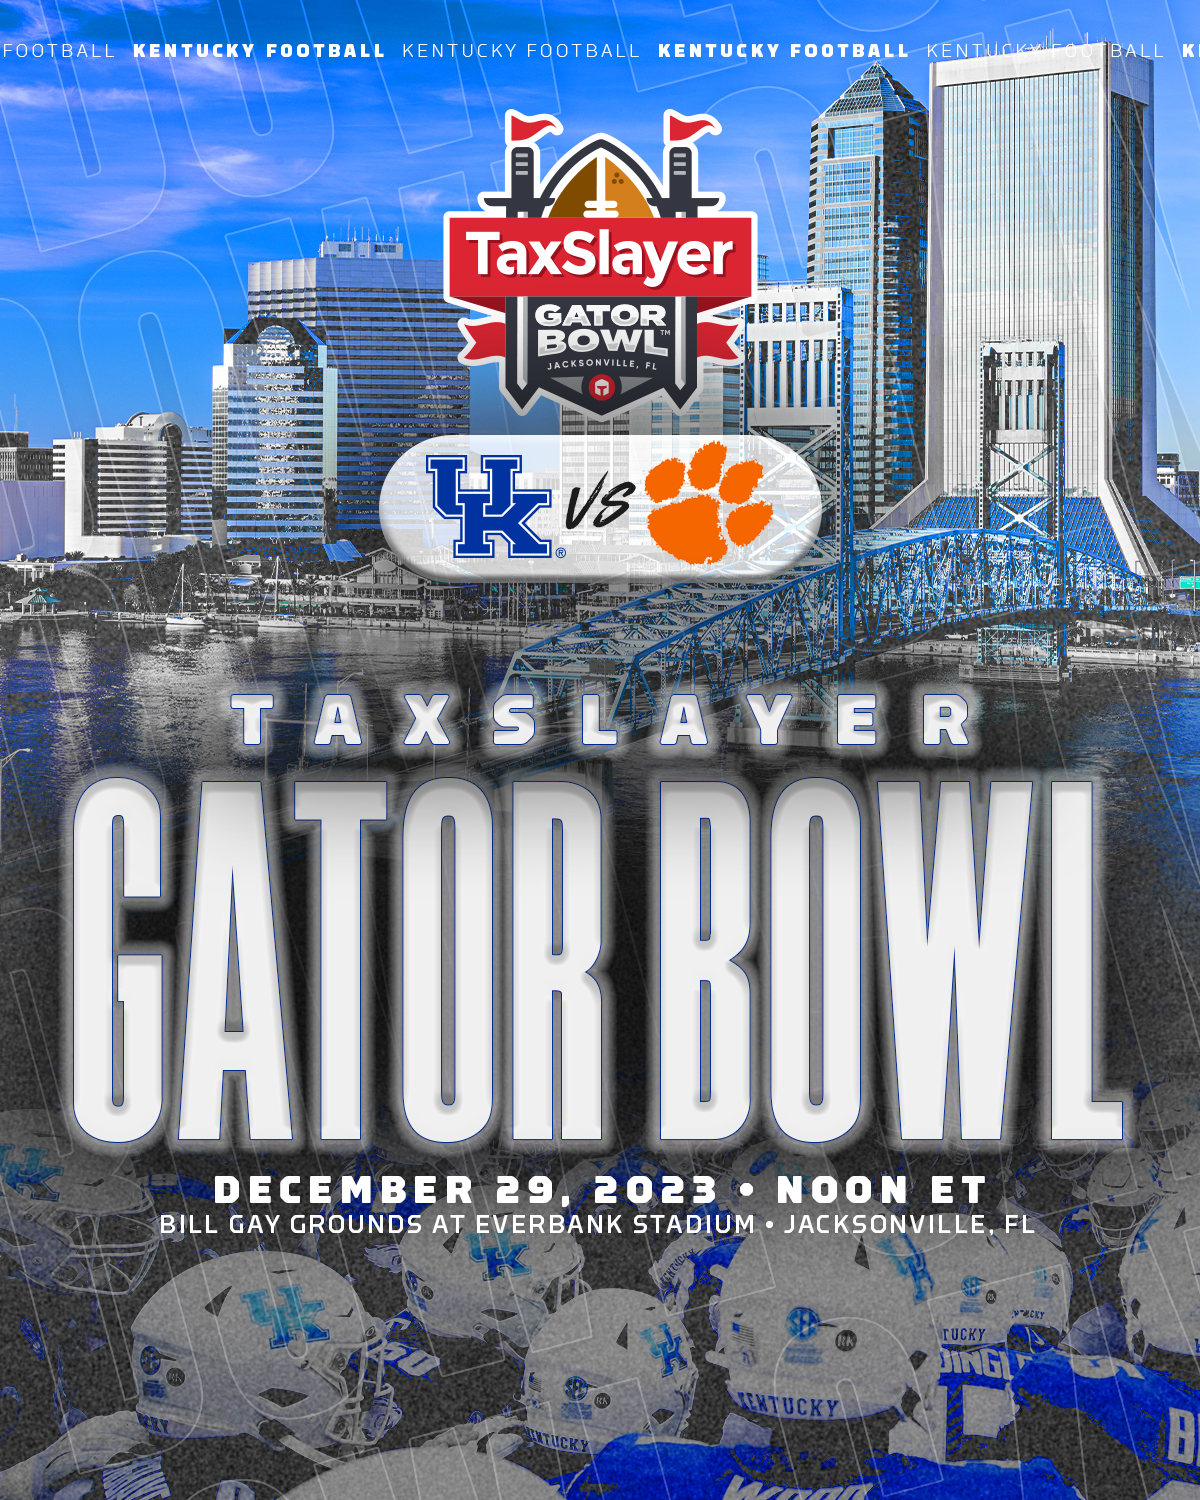 Kentucky Football Bound for the 2023 TaxSlayer Gator Bowl